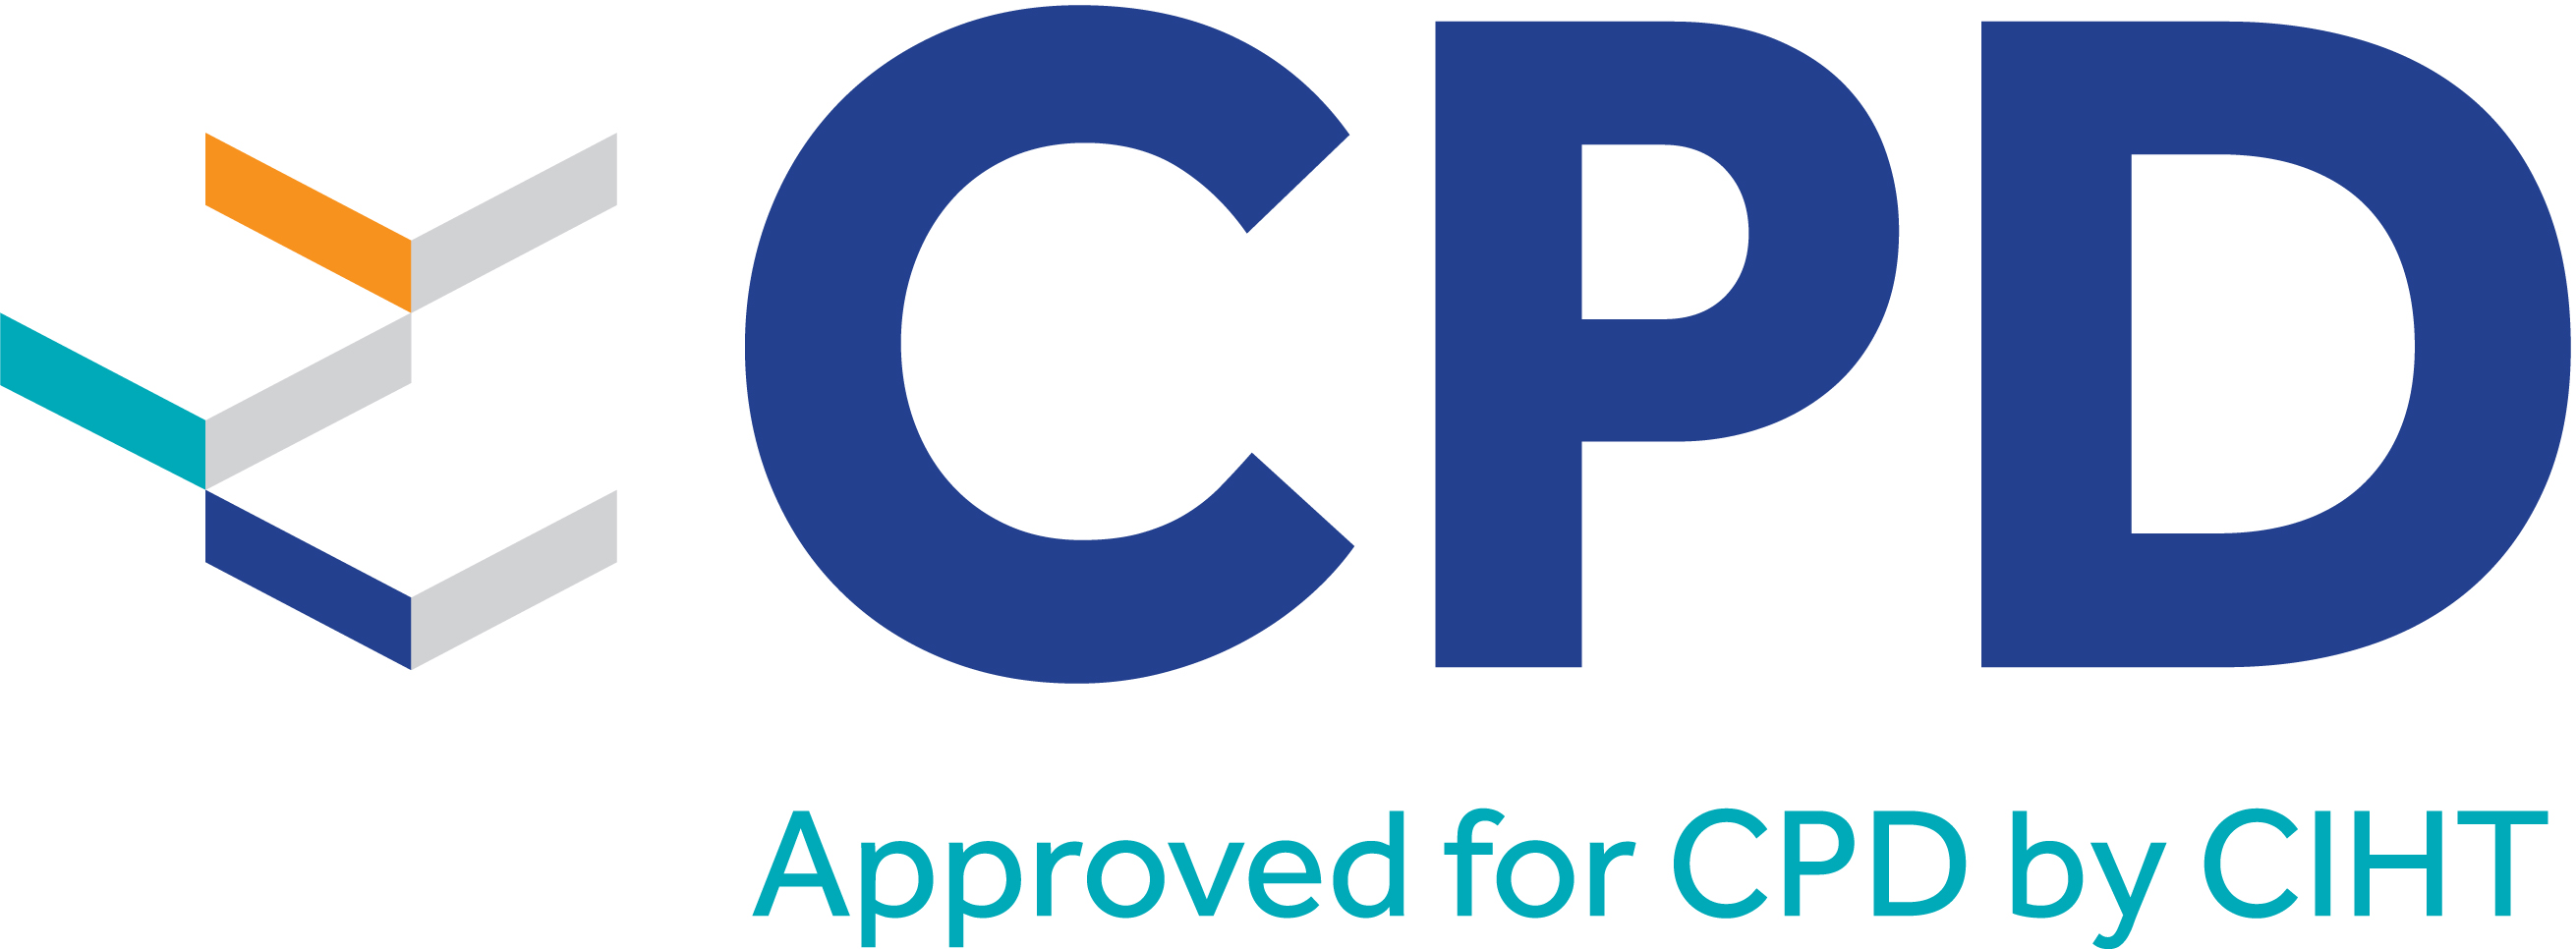 ciht cpd logo